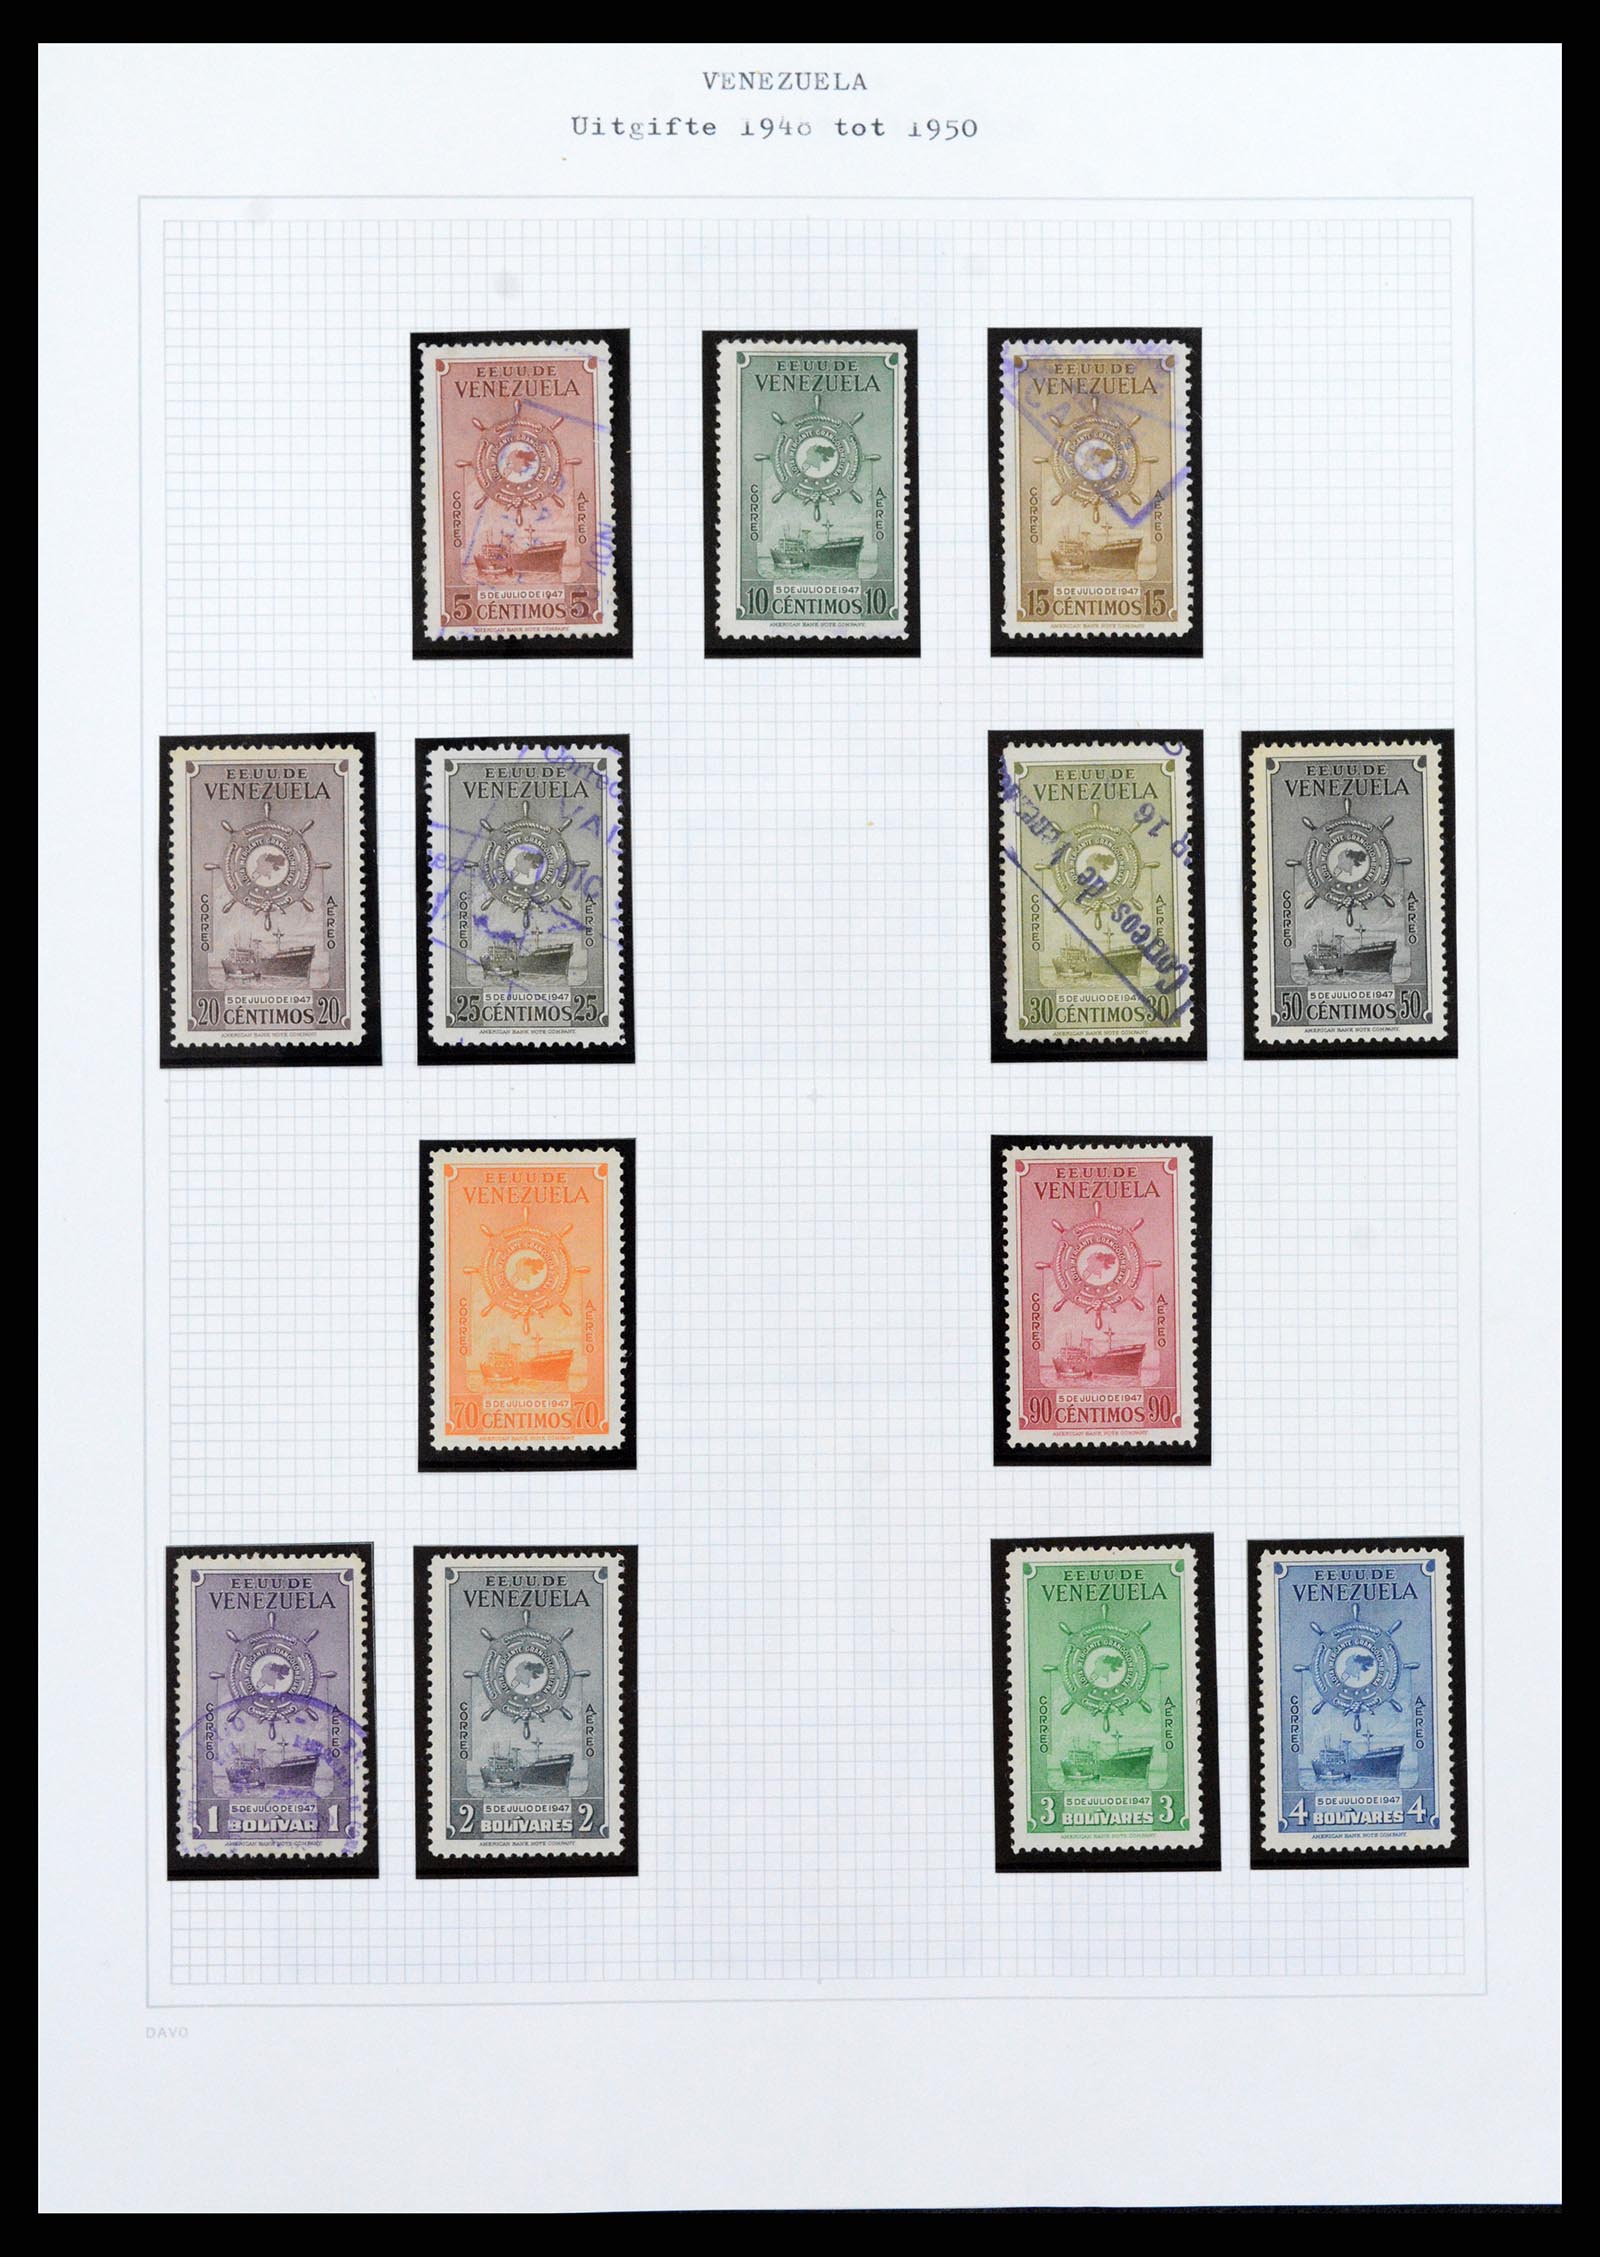 37353 070 - Stamp collection 37353 Venezuela 1880-1960.